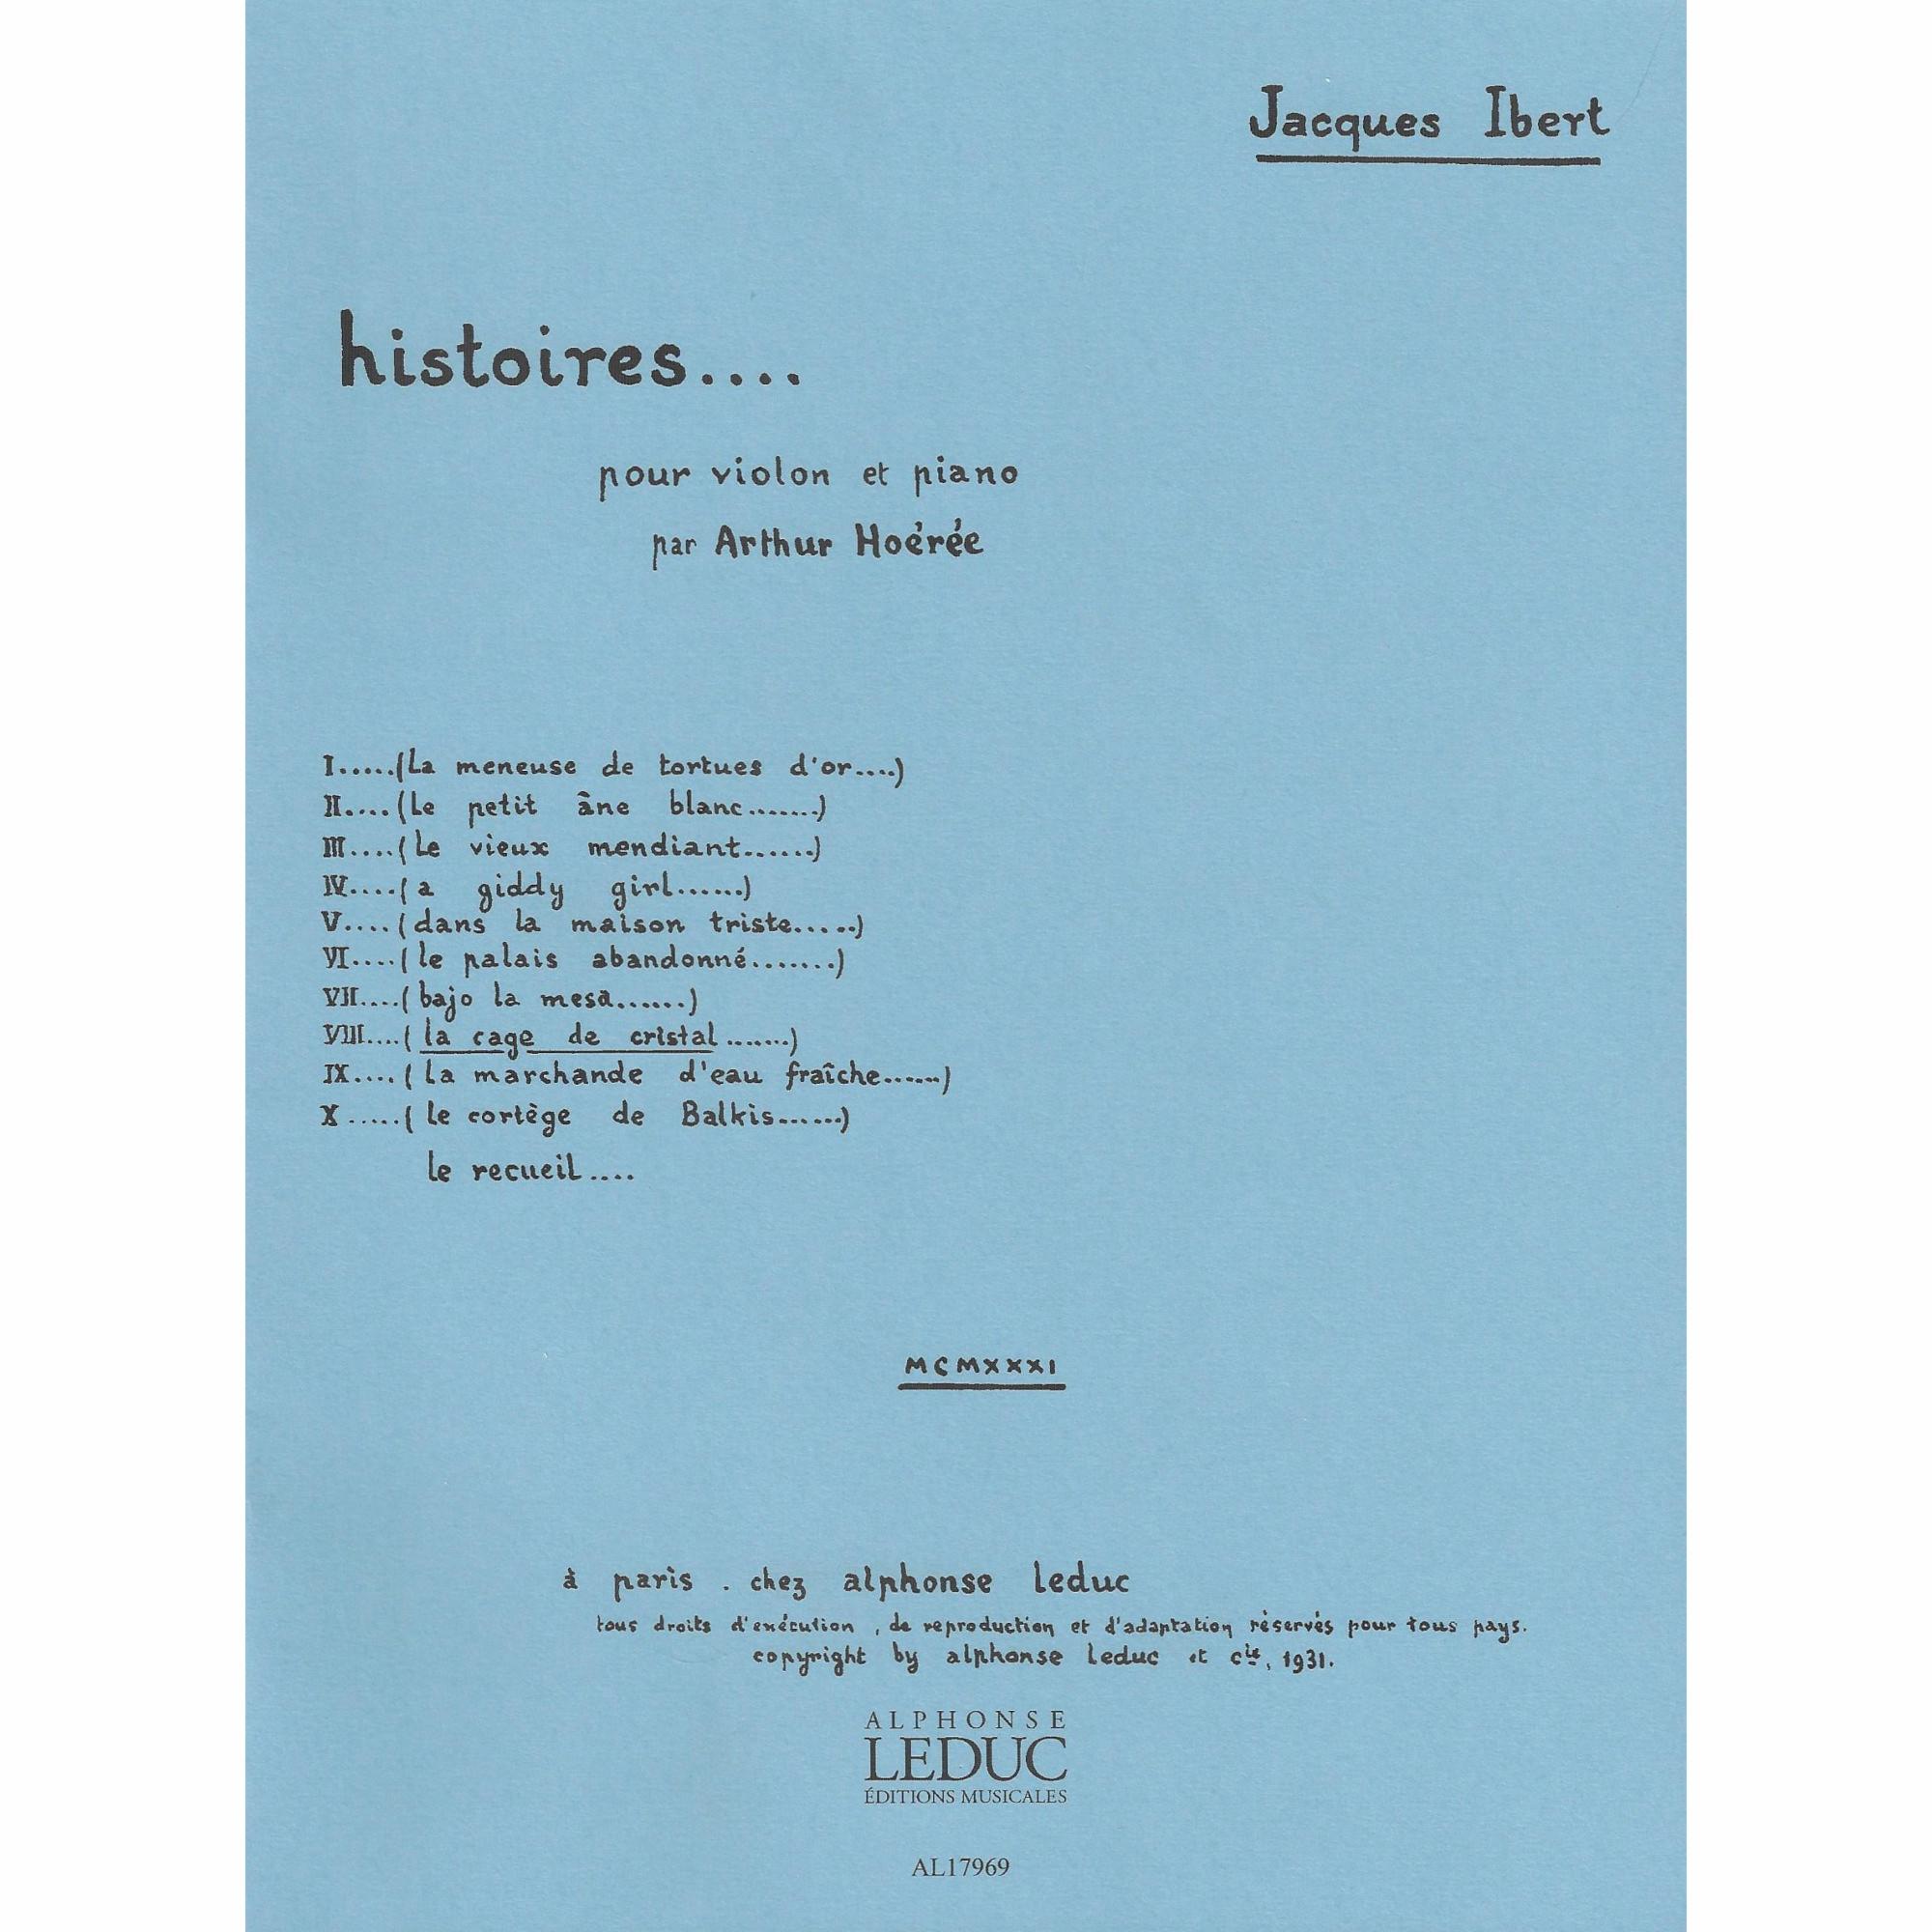 Ibert -- La Cage de Cristal, from Histoires for Violin and Piano